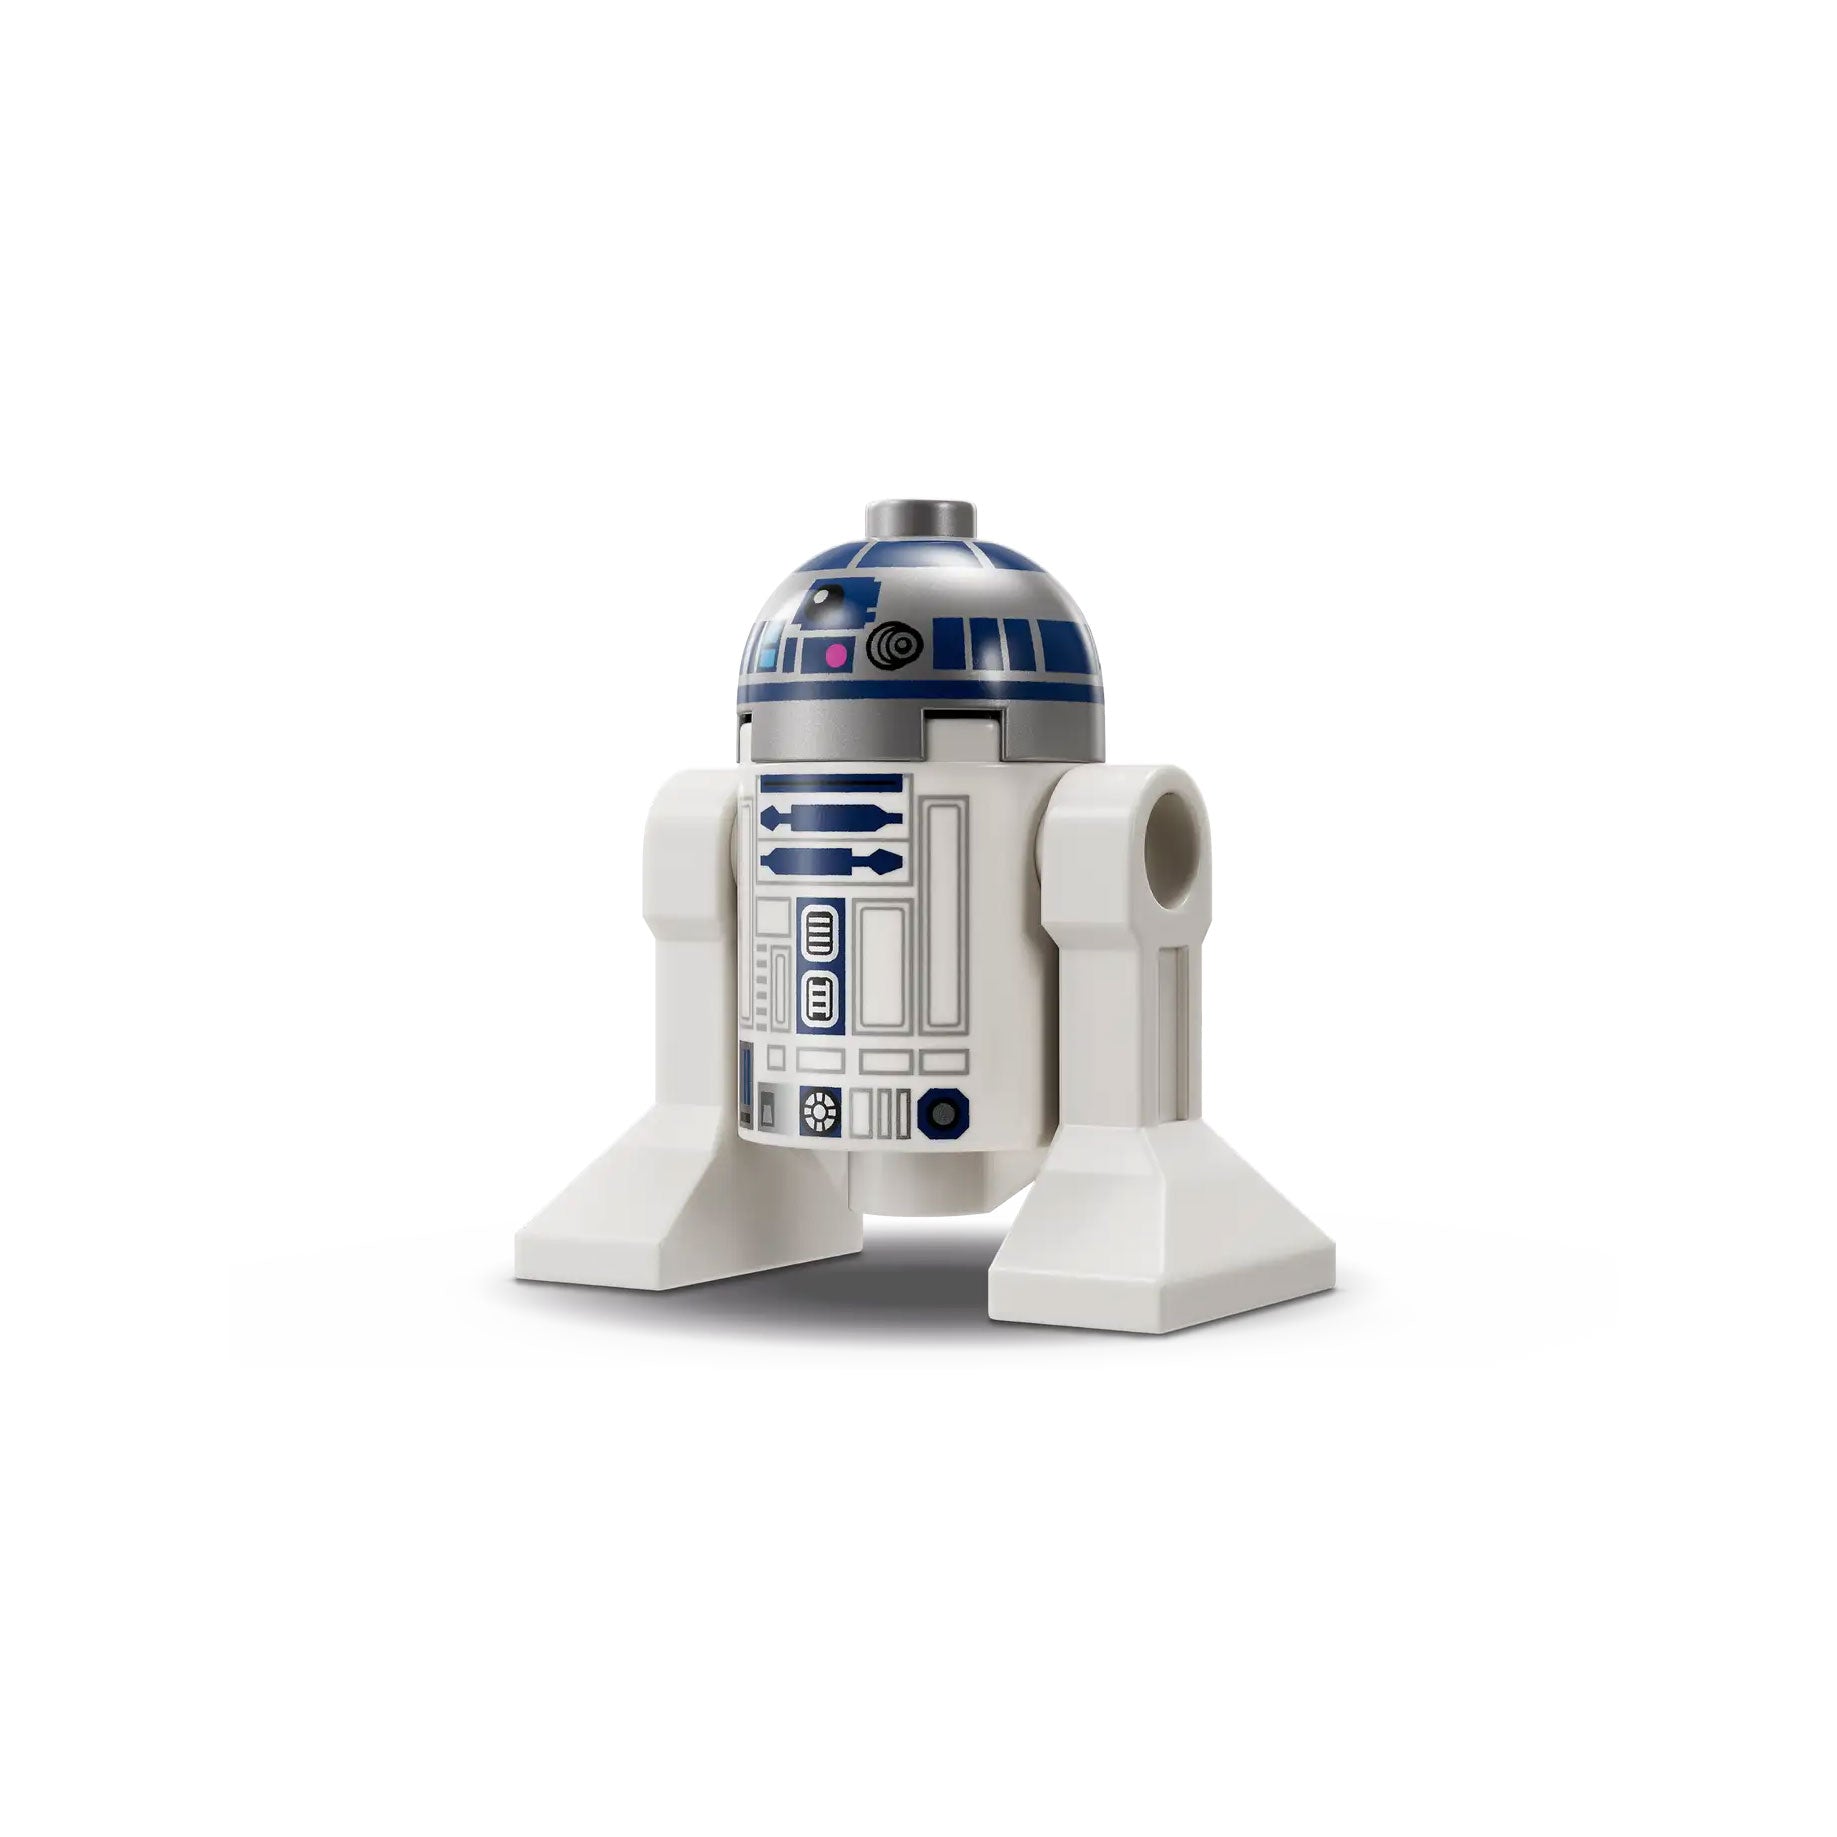 LEGO® 75379 Star Wars™ - UCS R2-D2™